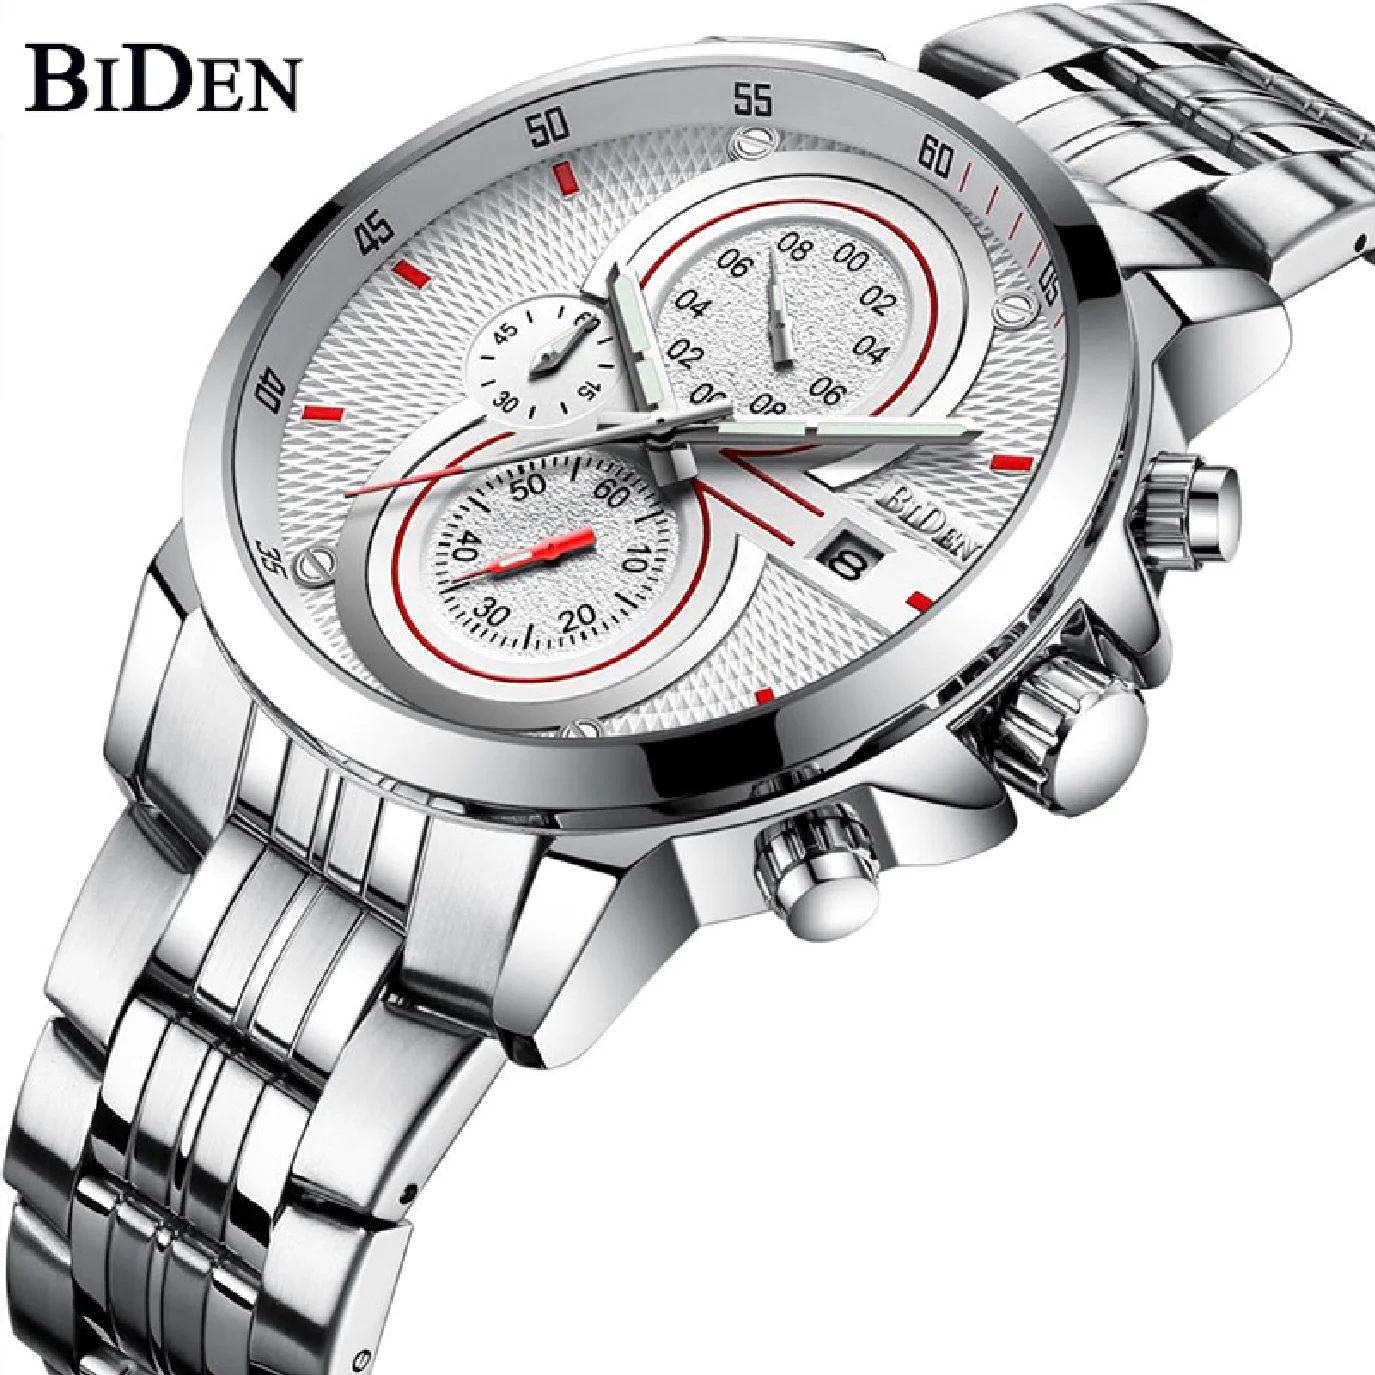 

BIDEN Men Quartz Watch Full Stainless Steel Waterproof Chronograph Sports Wristwatch Male Calendar Clocks Gifts reloj hombre